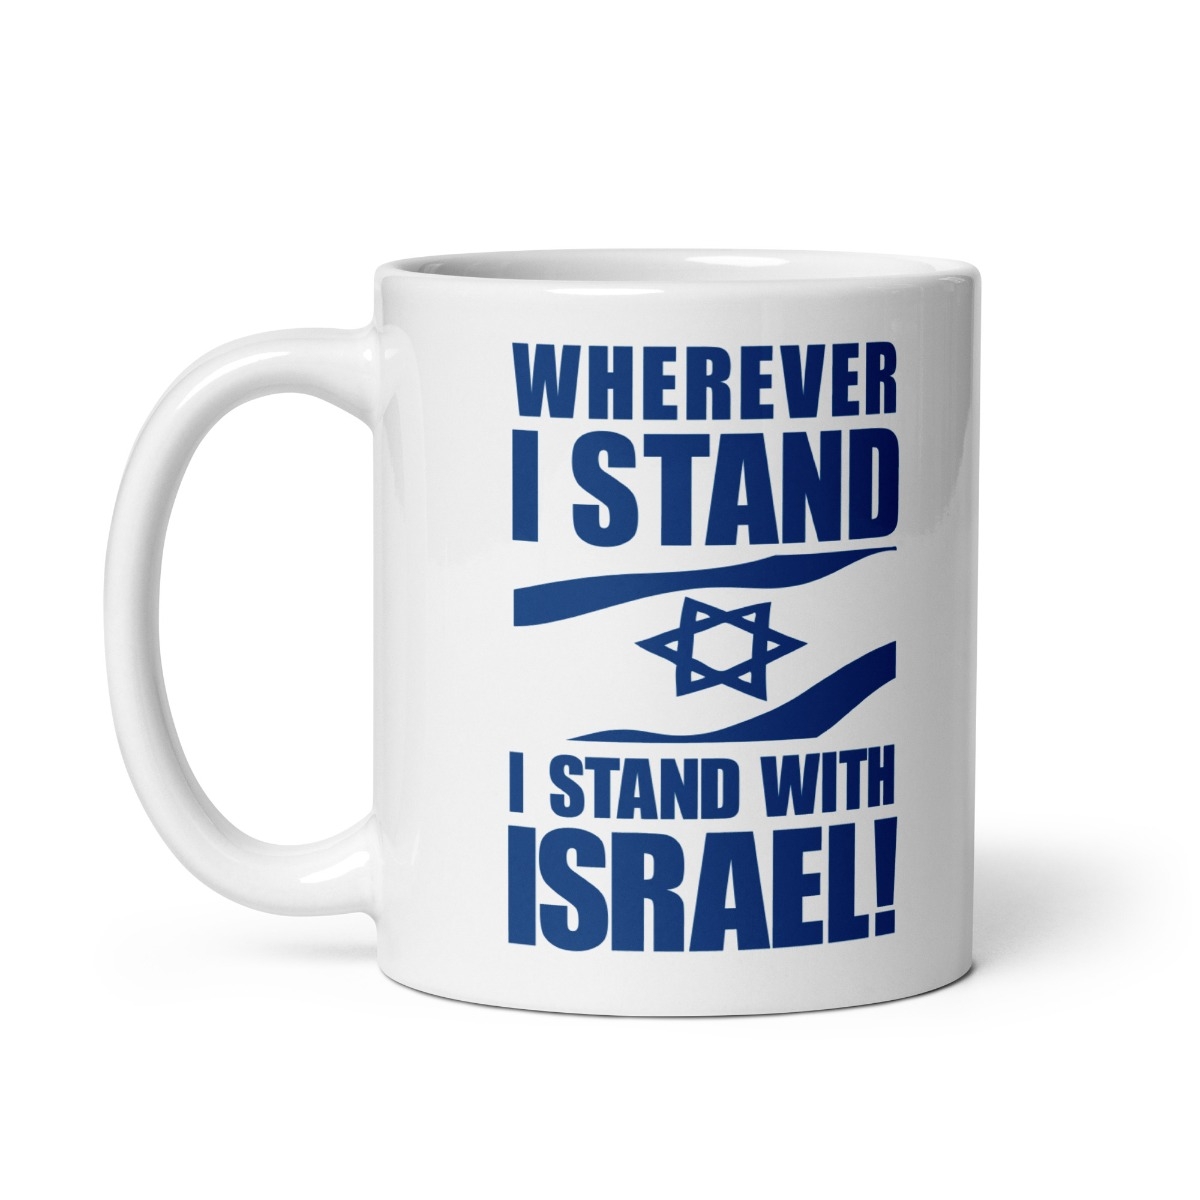 I Stand with Israel! White Mug - 1